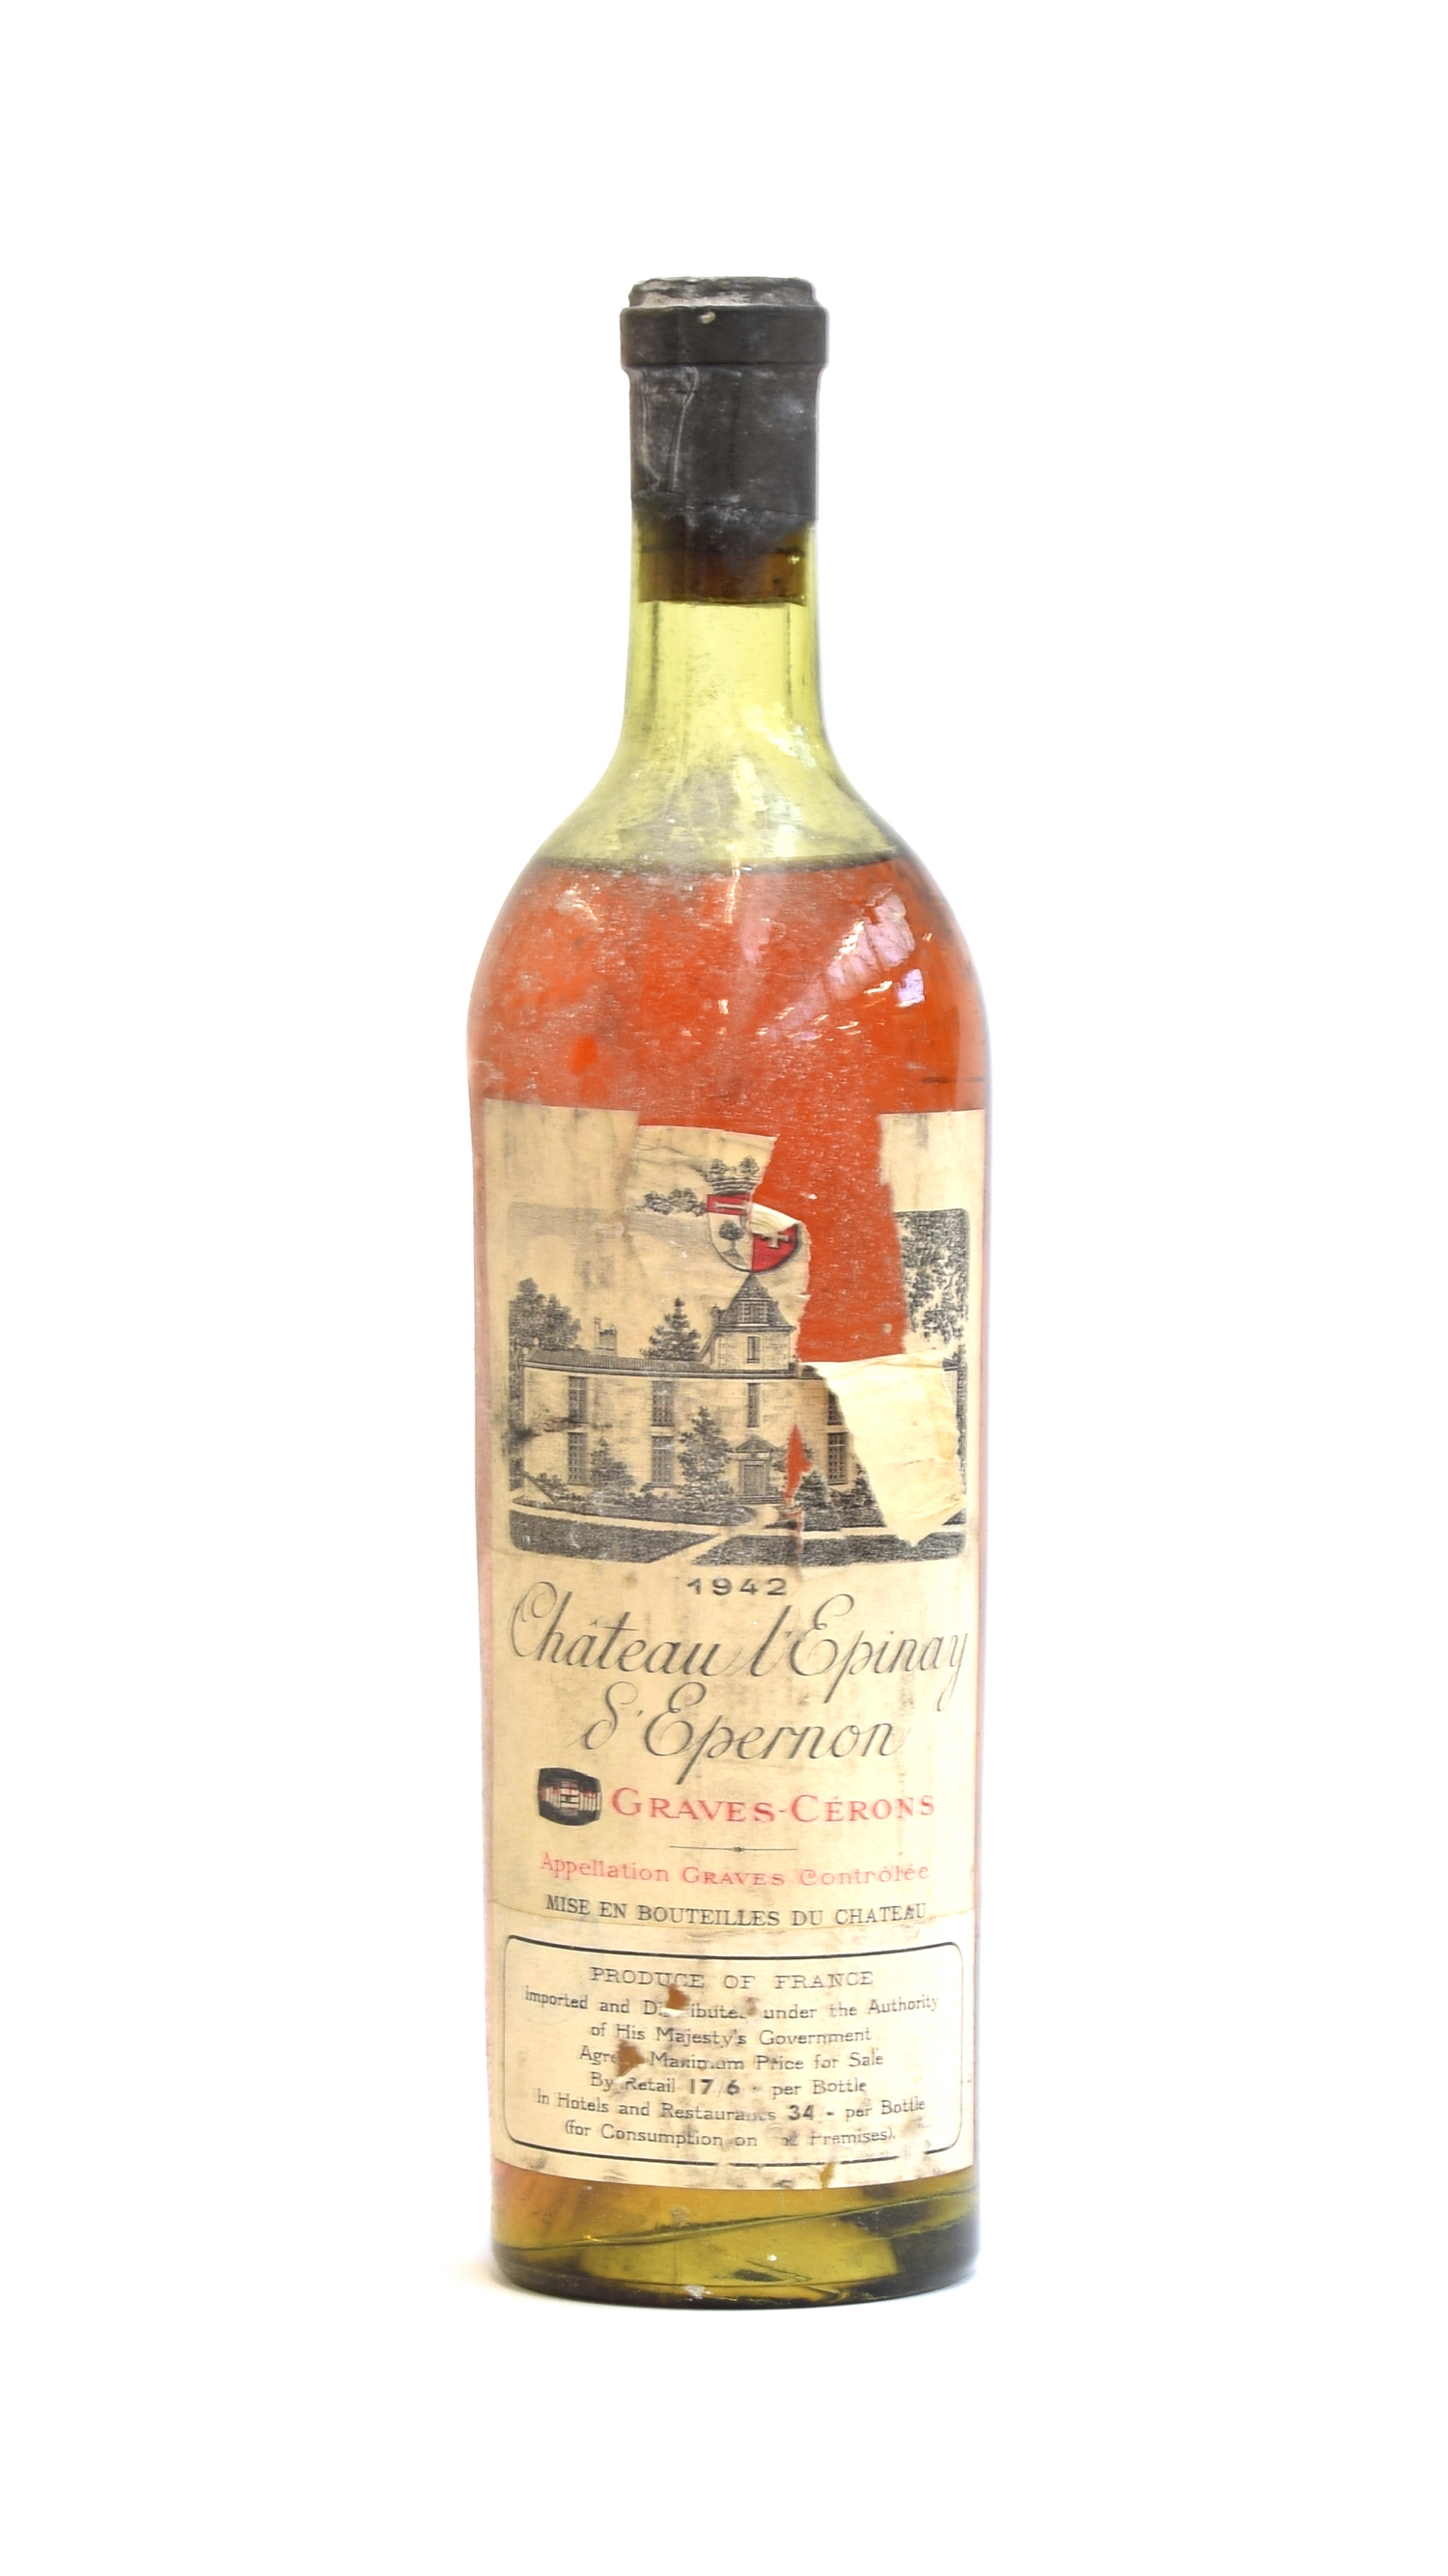 1942 Chateau L'Epinay d'Epernon dessert wine, Graves-Cerons (75cl)